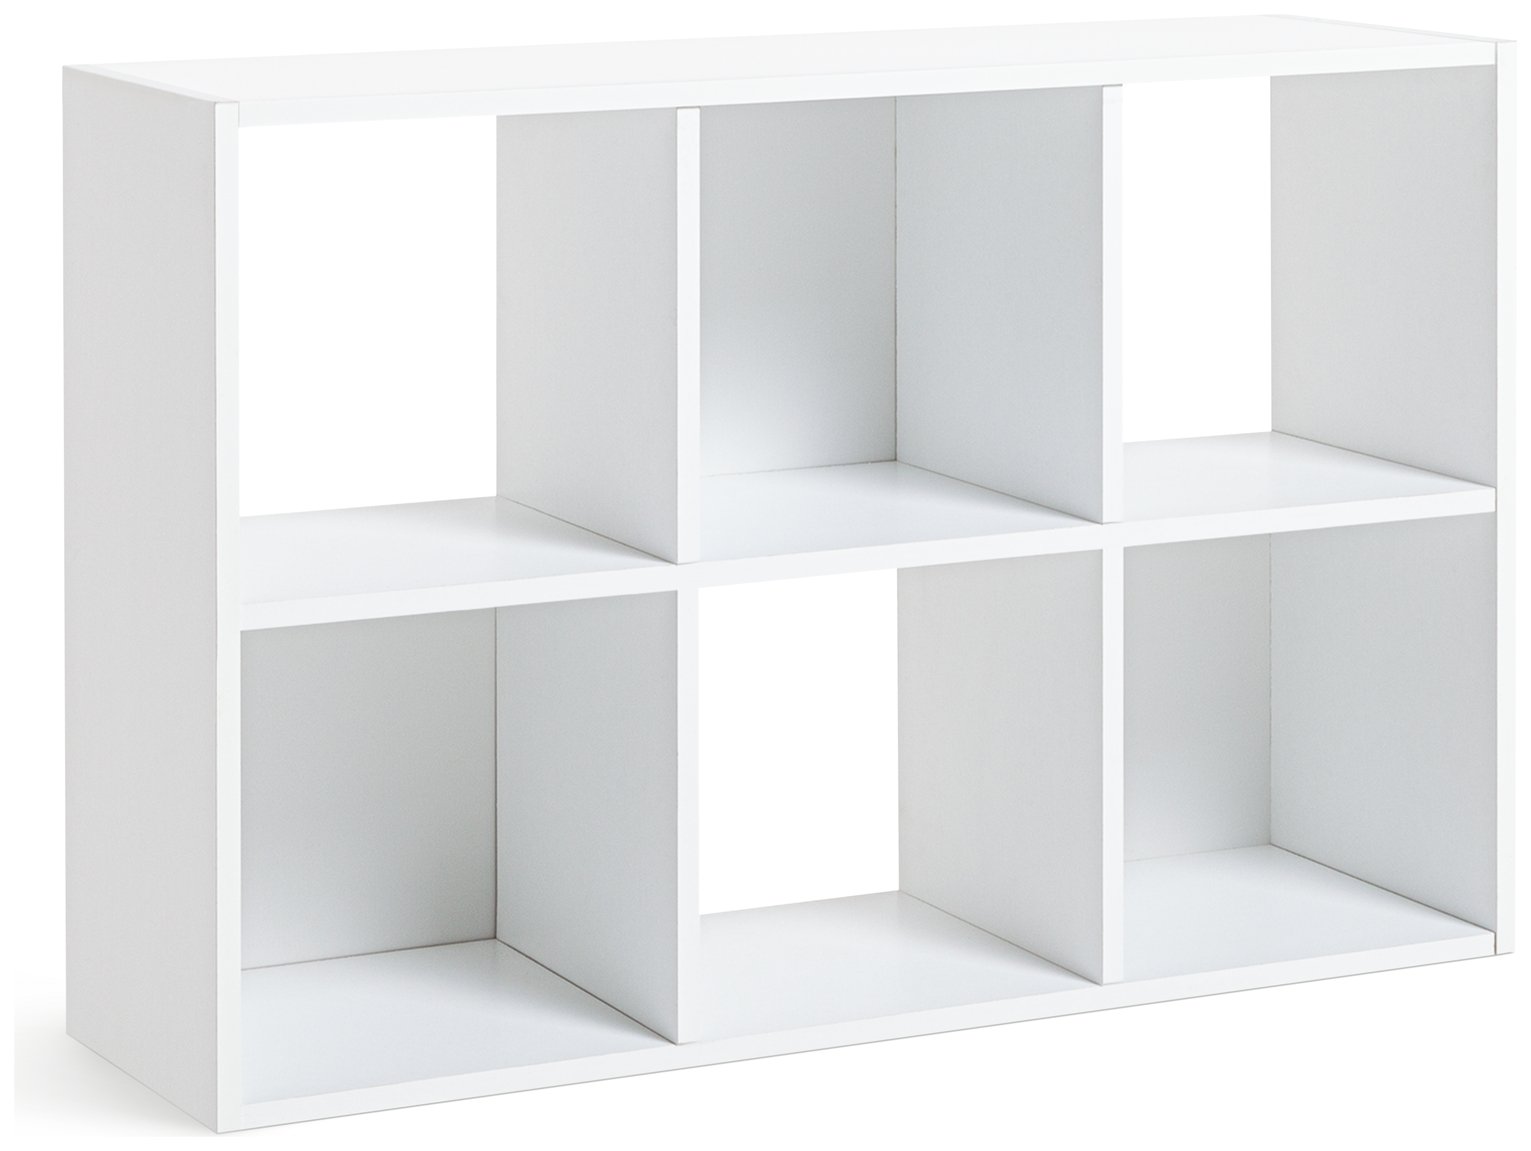 children's cube storage units